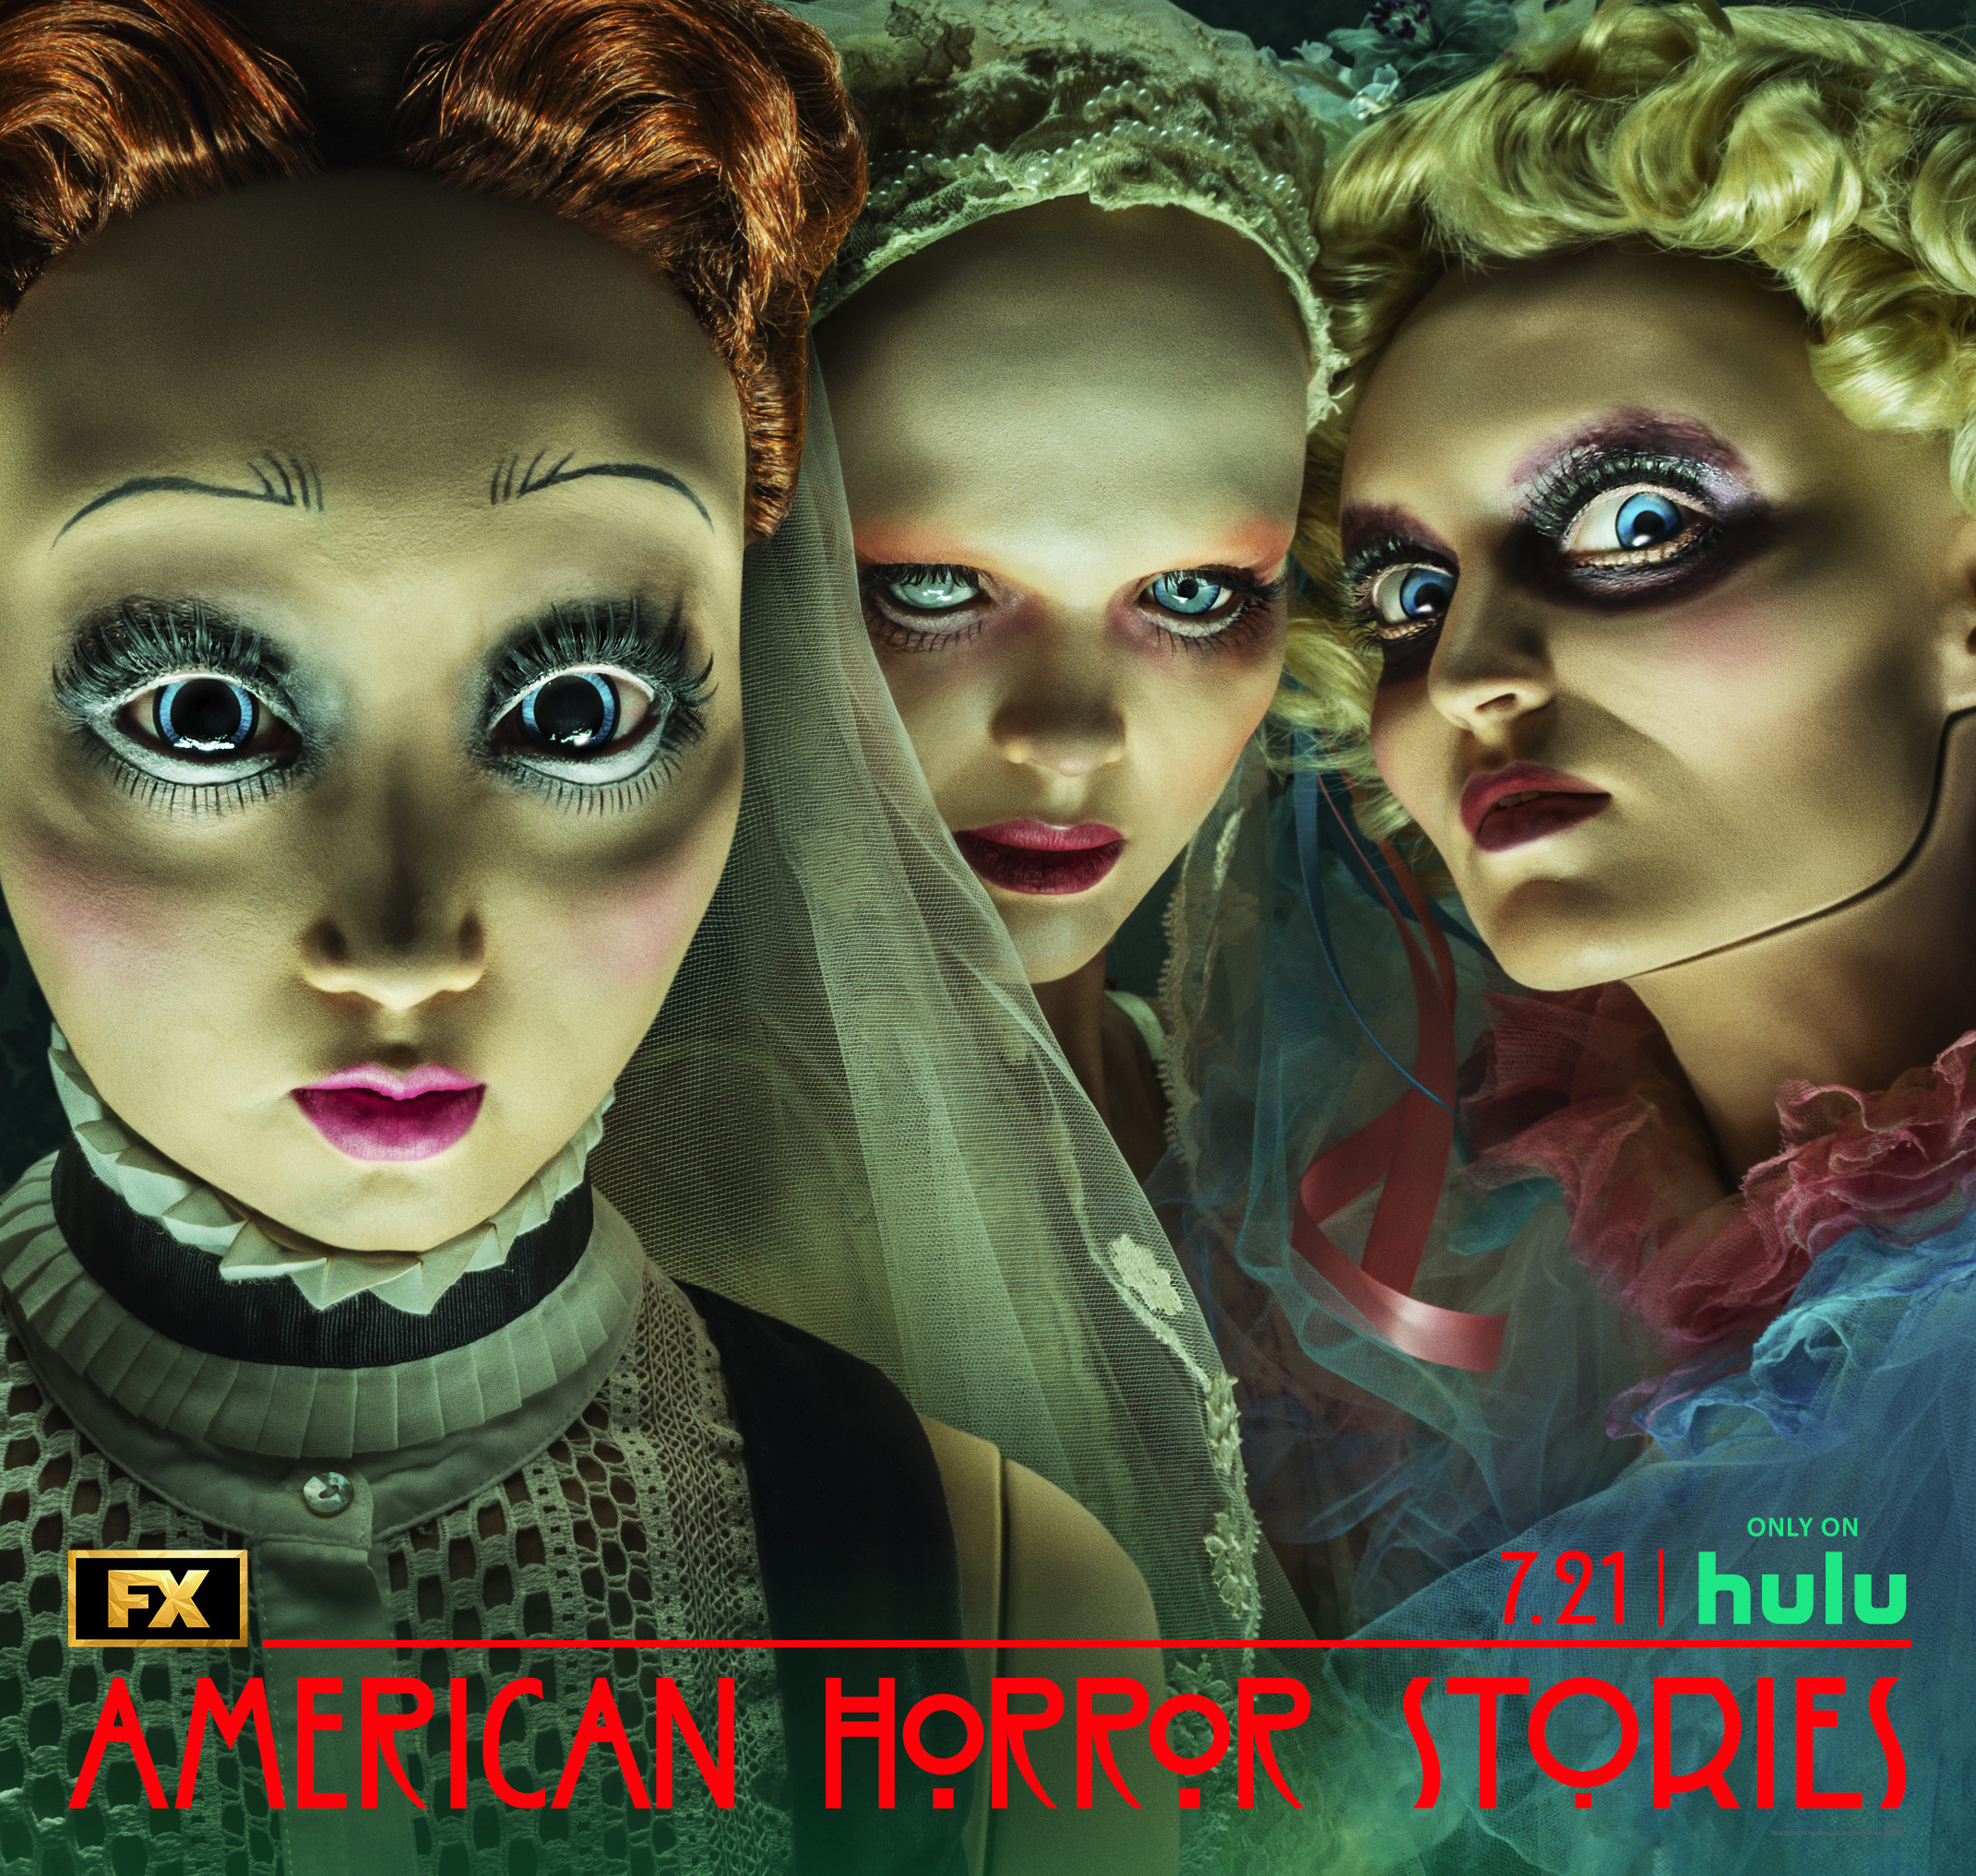 Mega Sized TV Poster Image for American Horror Stories (#12 of 24)